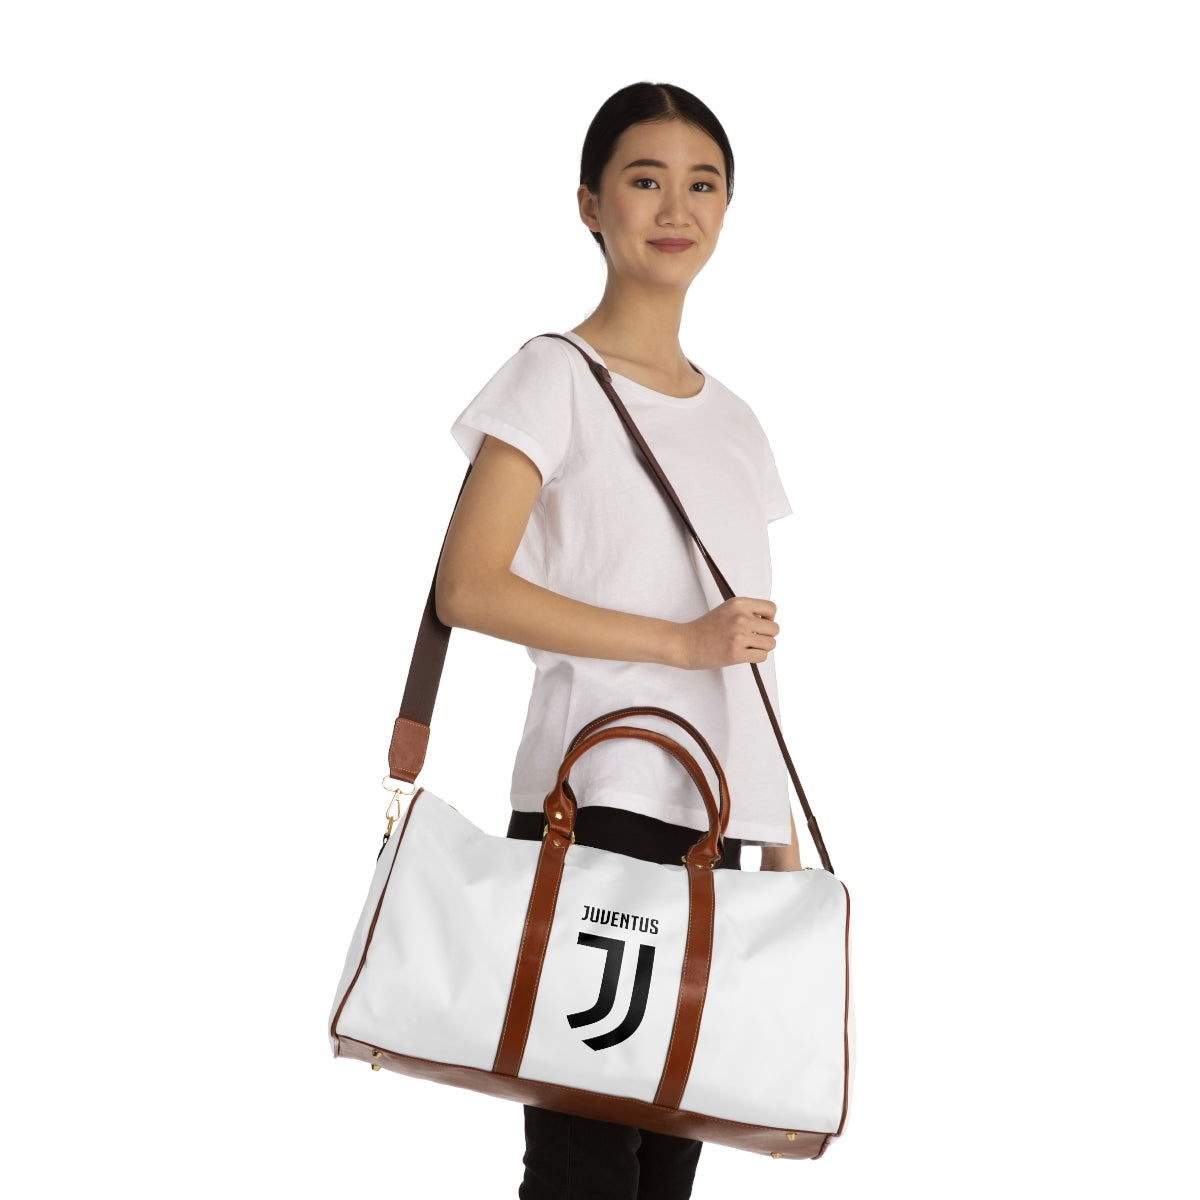 Juventus Waterproof Travel Bag